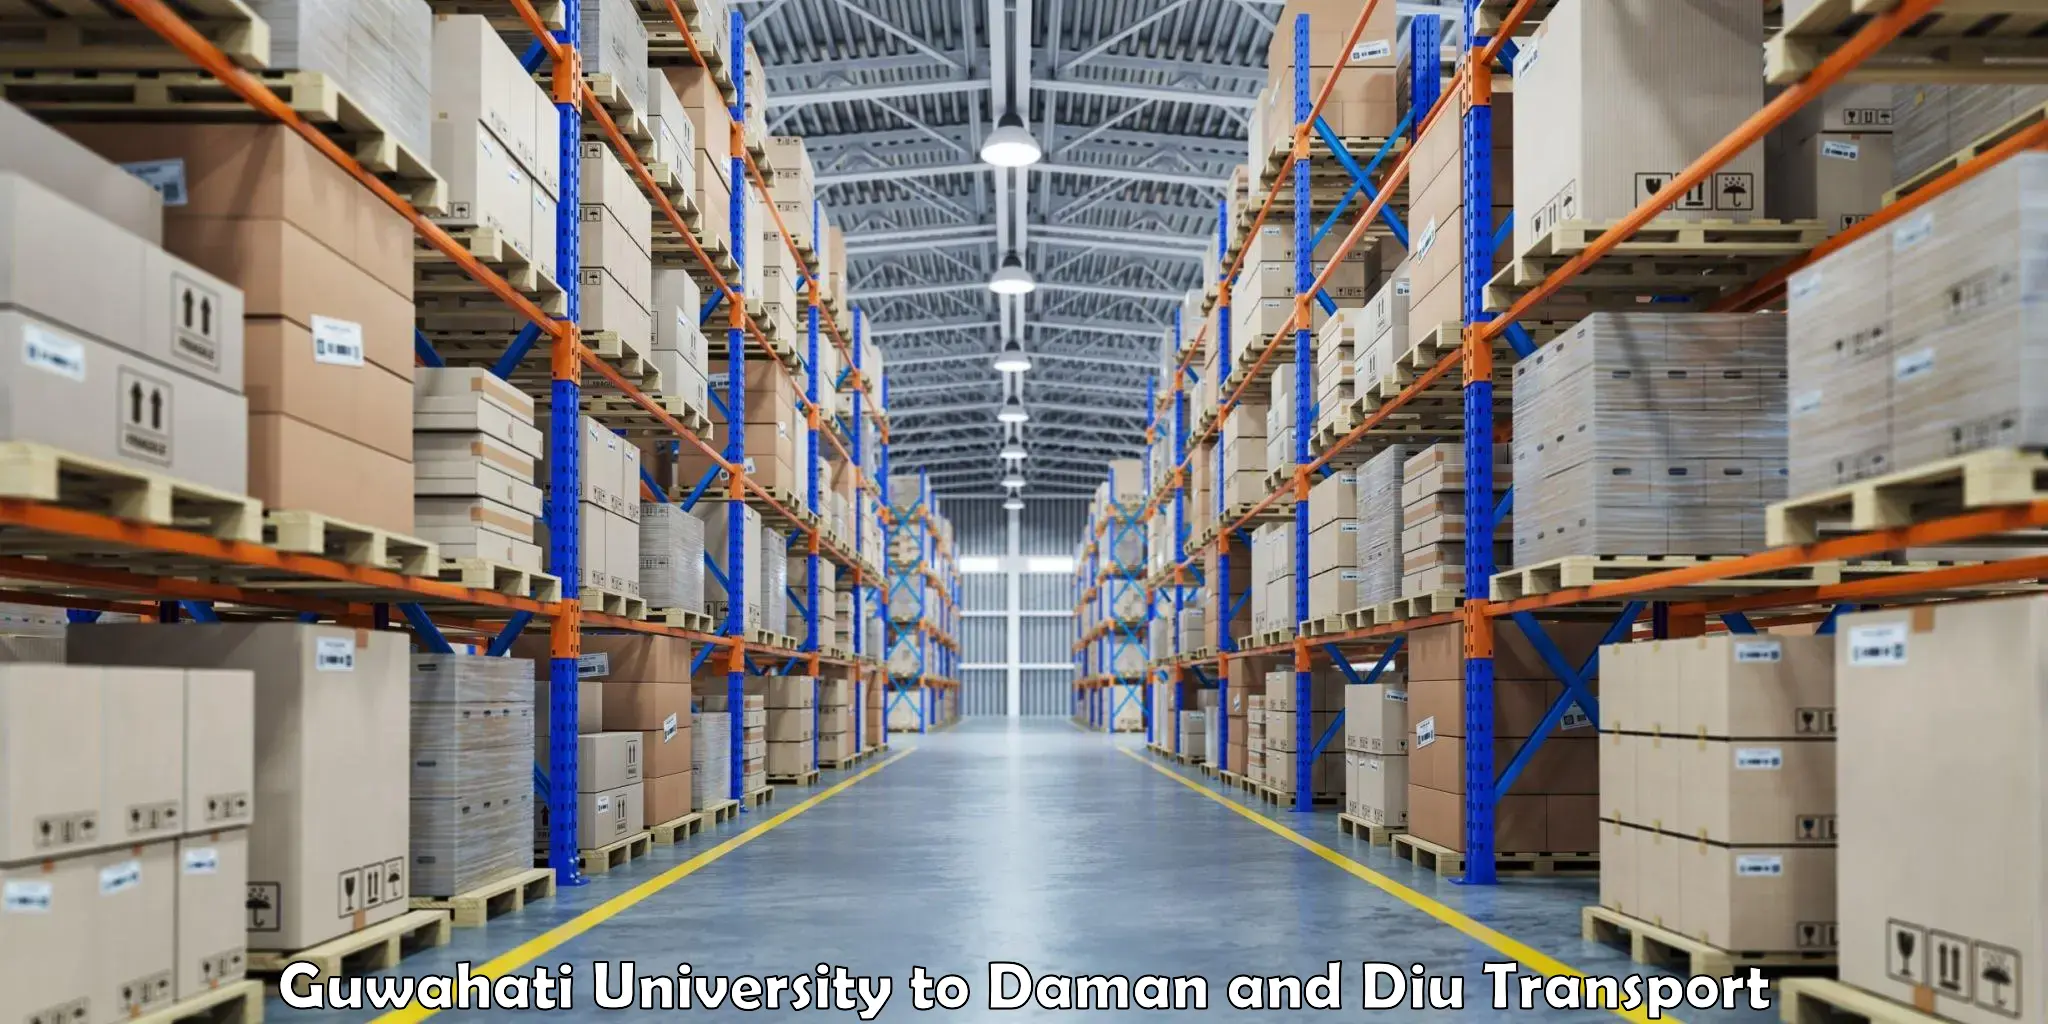 Truck transport companies in India Guwahati University to Daman